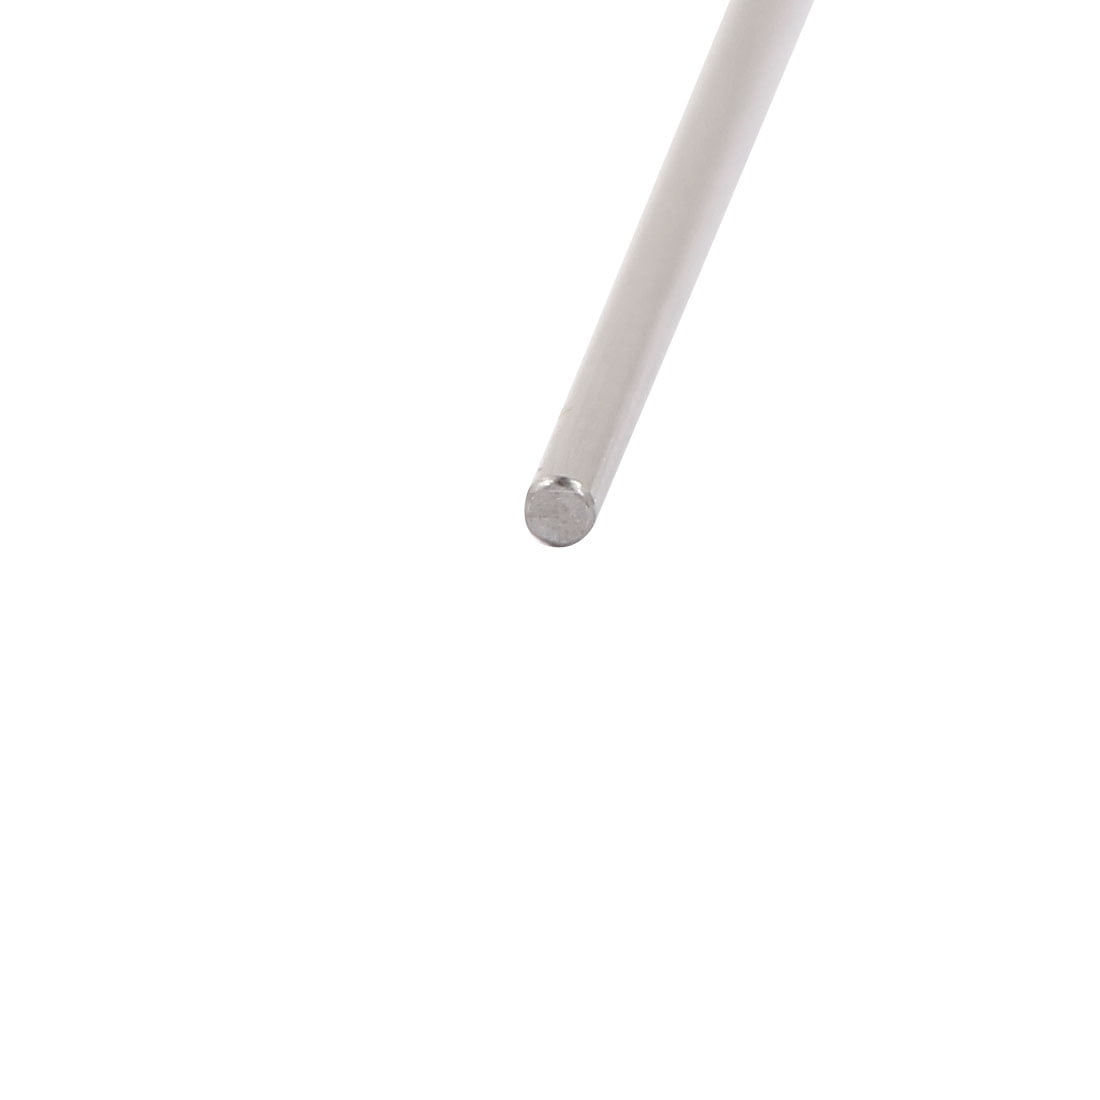 0.24mm Diameter 51mm Length Tungsten Carbide Bar Pin Gage Gauge